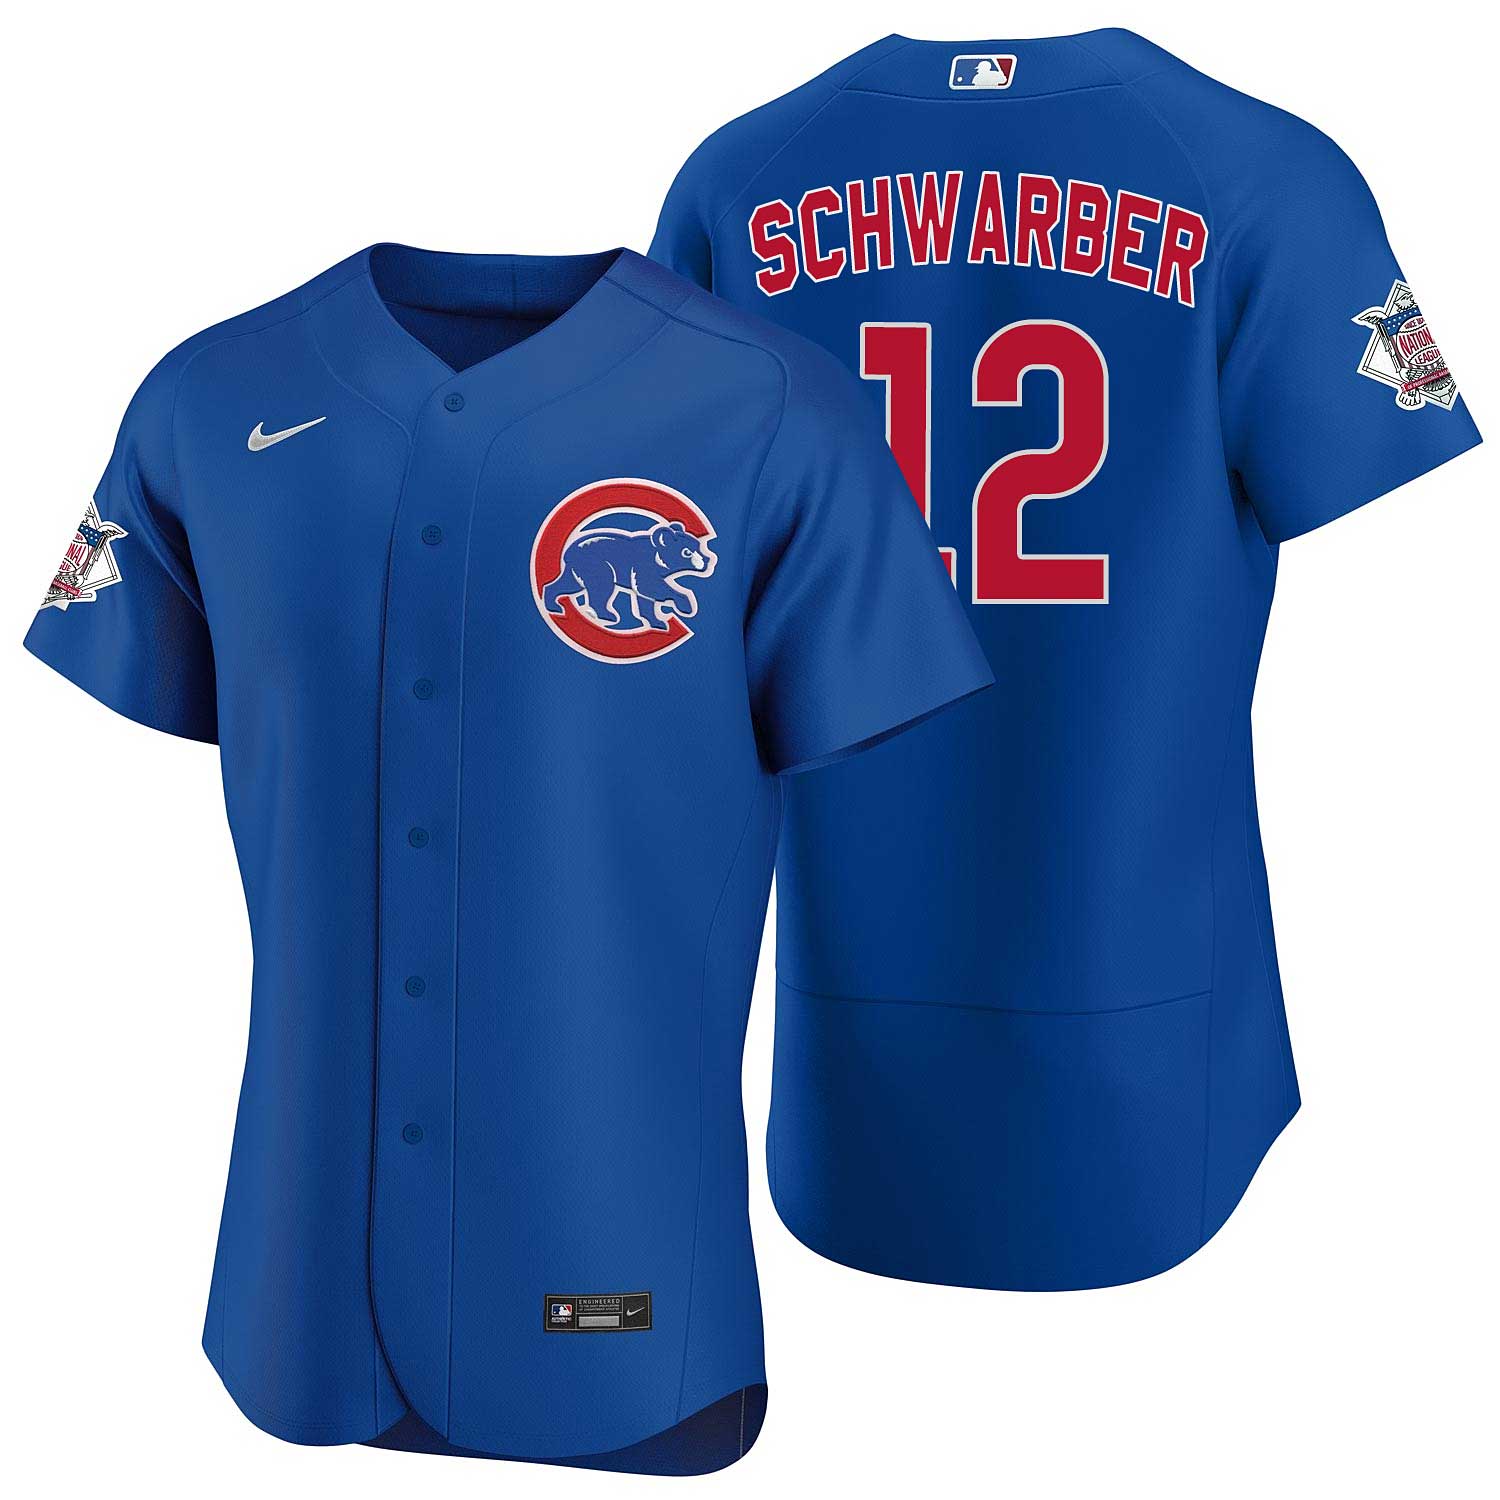 New Chicago Cubs Kyle Schwarber Jersey, Men's XL for Sale in